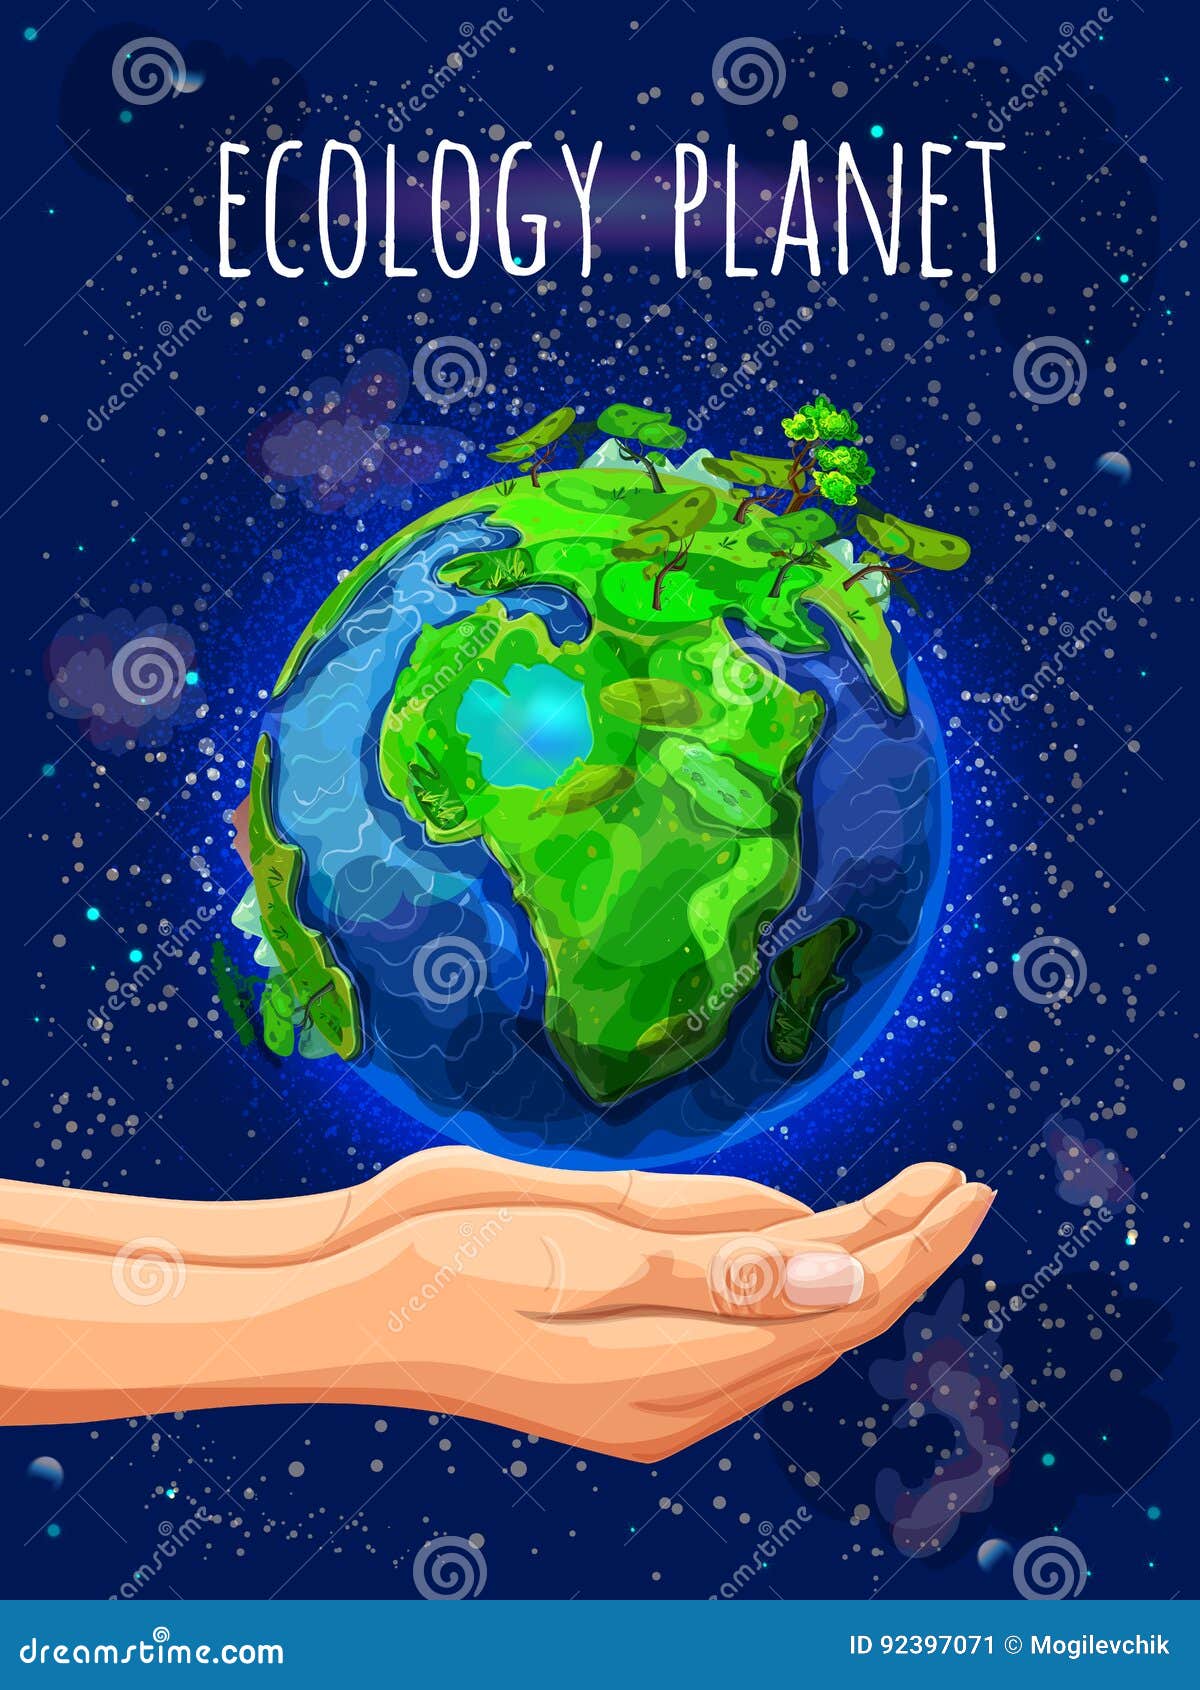 Cartoon Eco Planet Poster stock vector. Illustration of design - 92397071